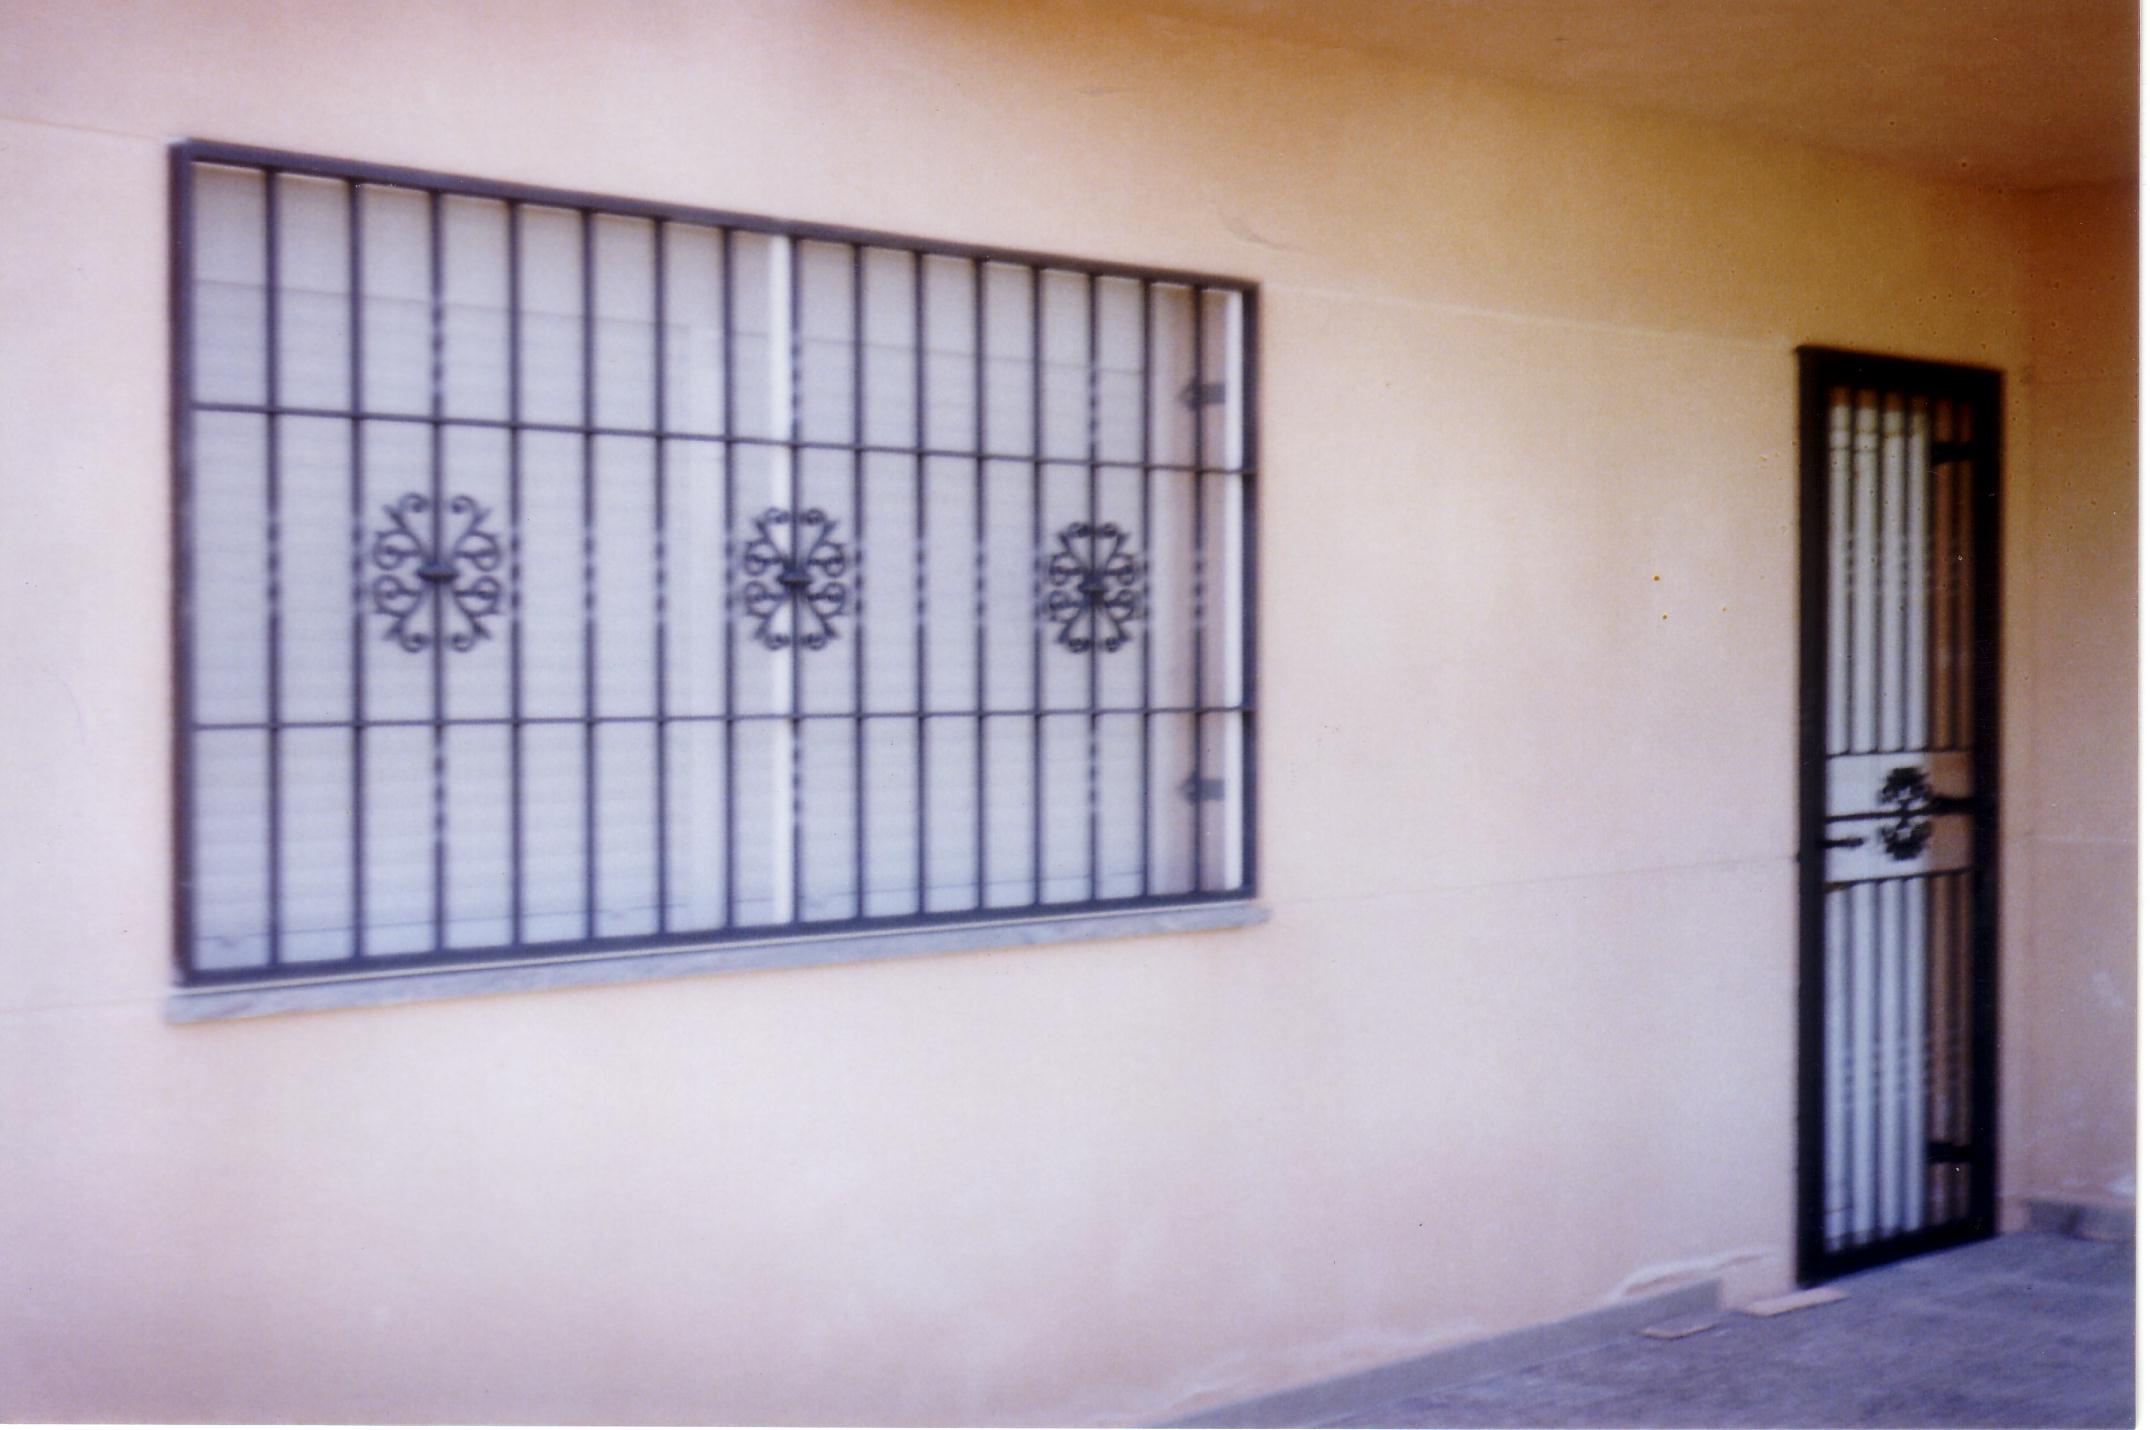 Puerta de reja y reja de ventana de forja con detalles de fundicion